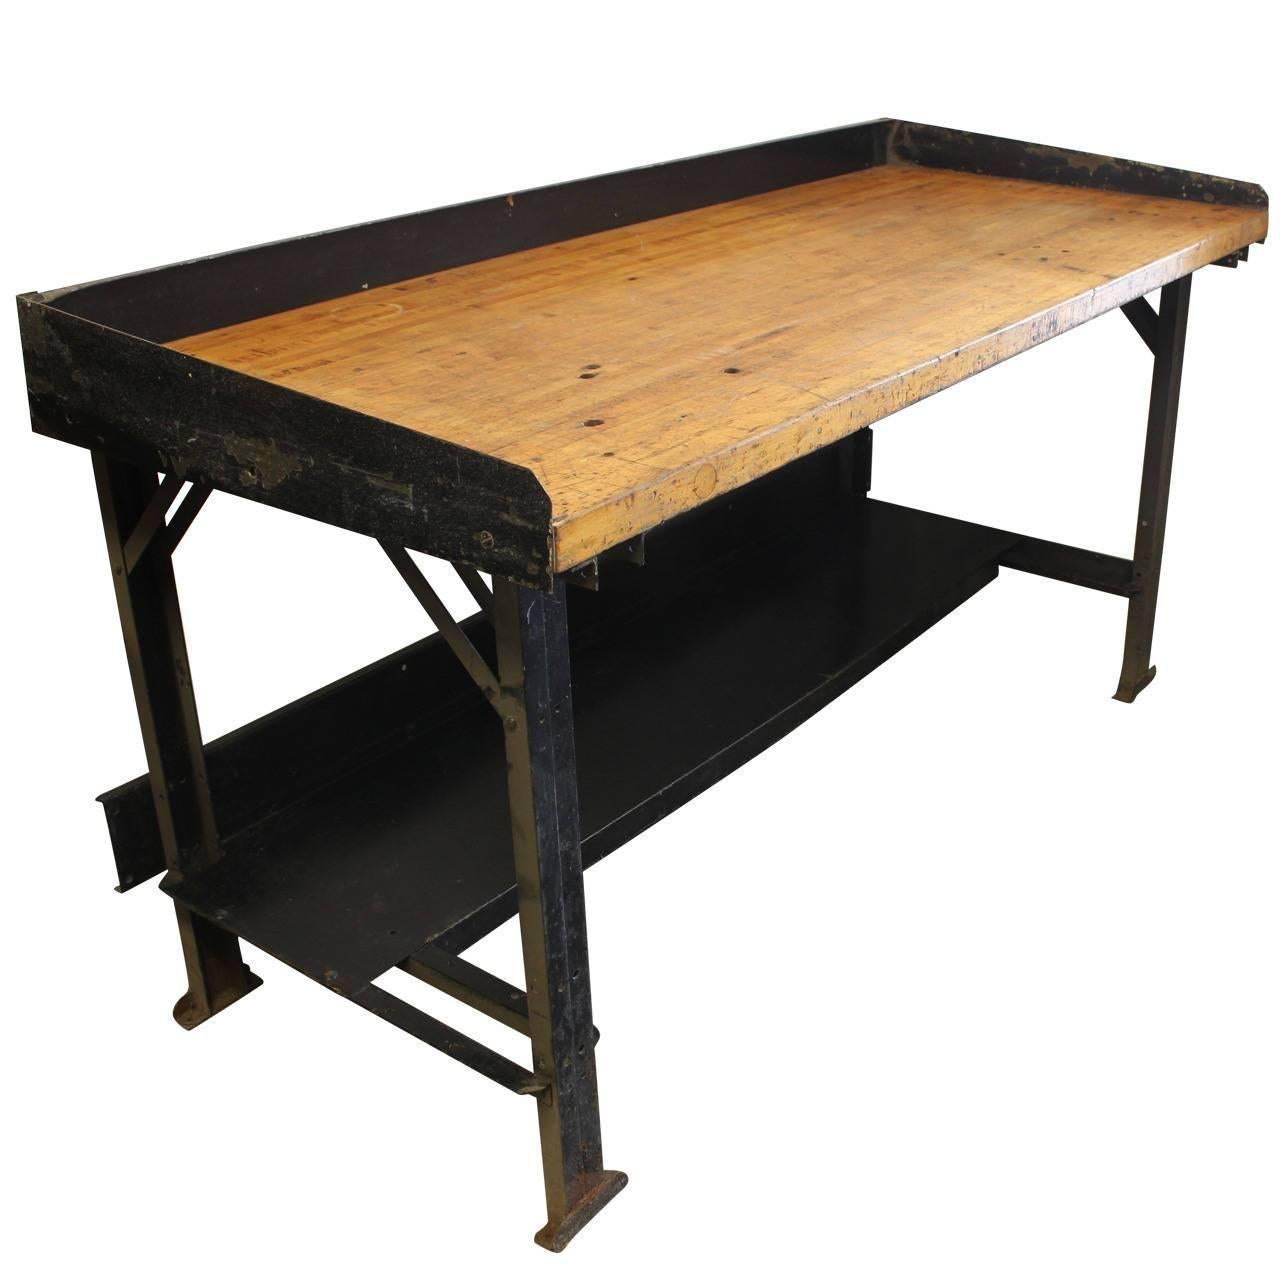  Vintage Industrial Work Table  For Sale